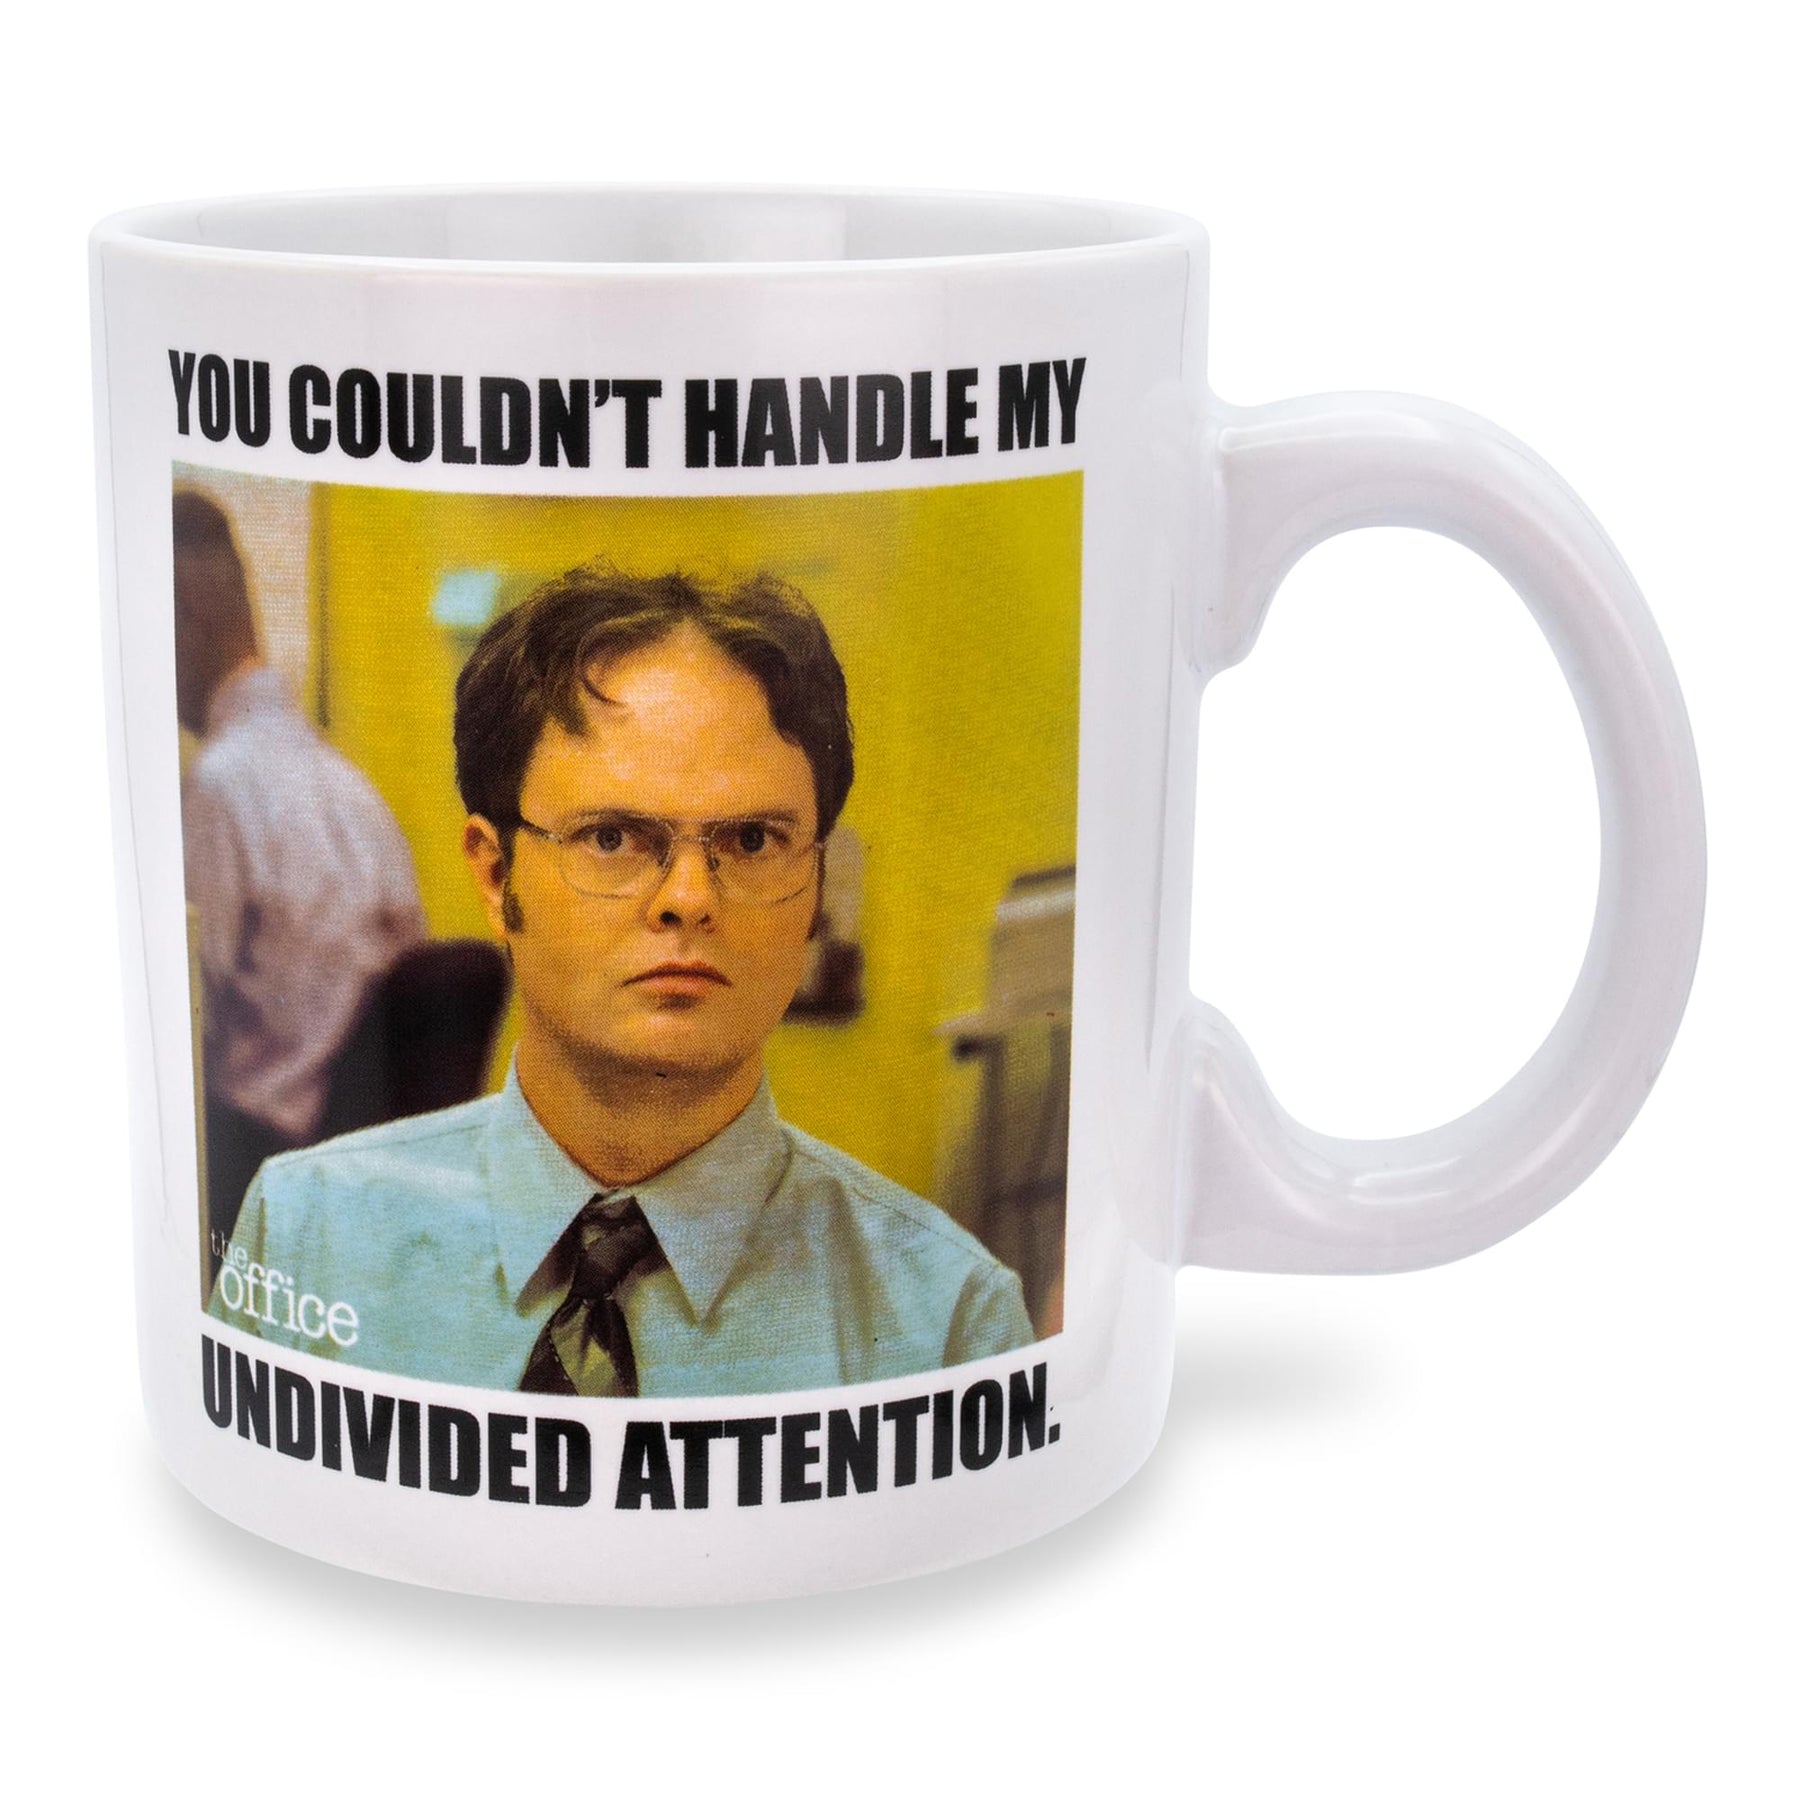 The Office World's Best Boss Coffee Mug – Fundom